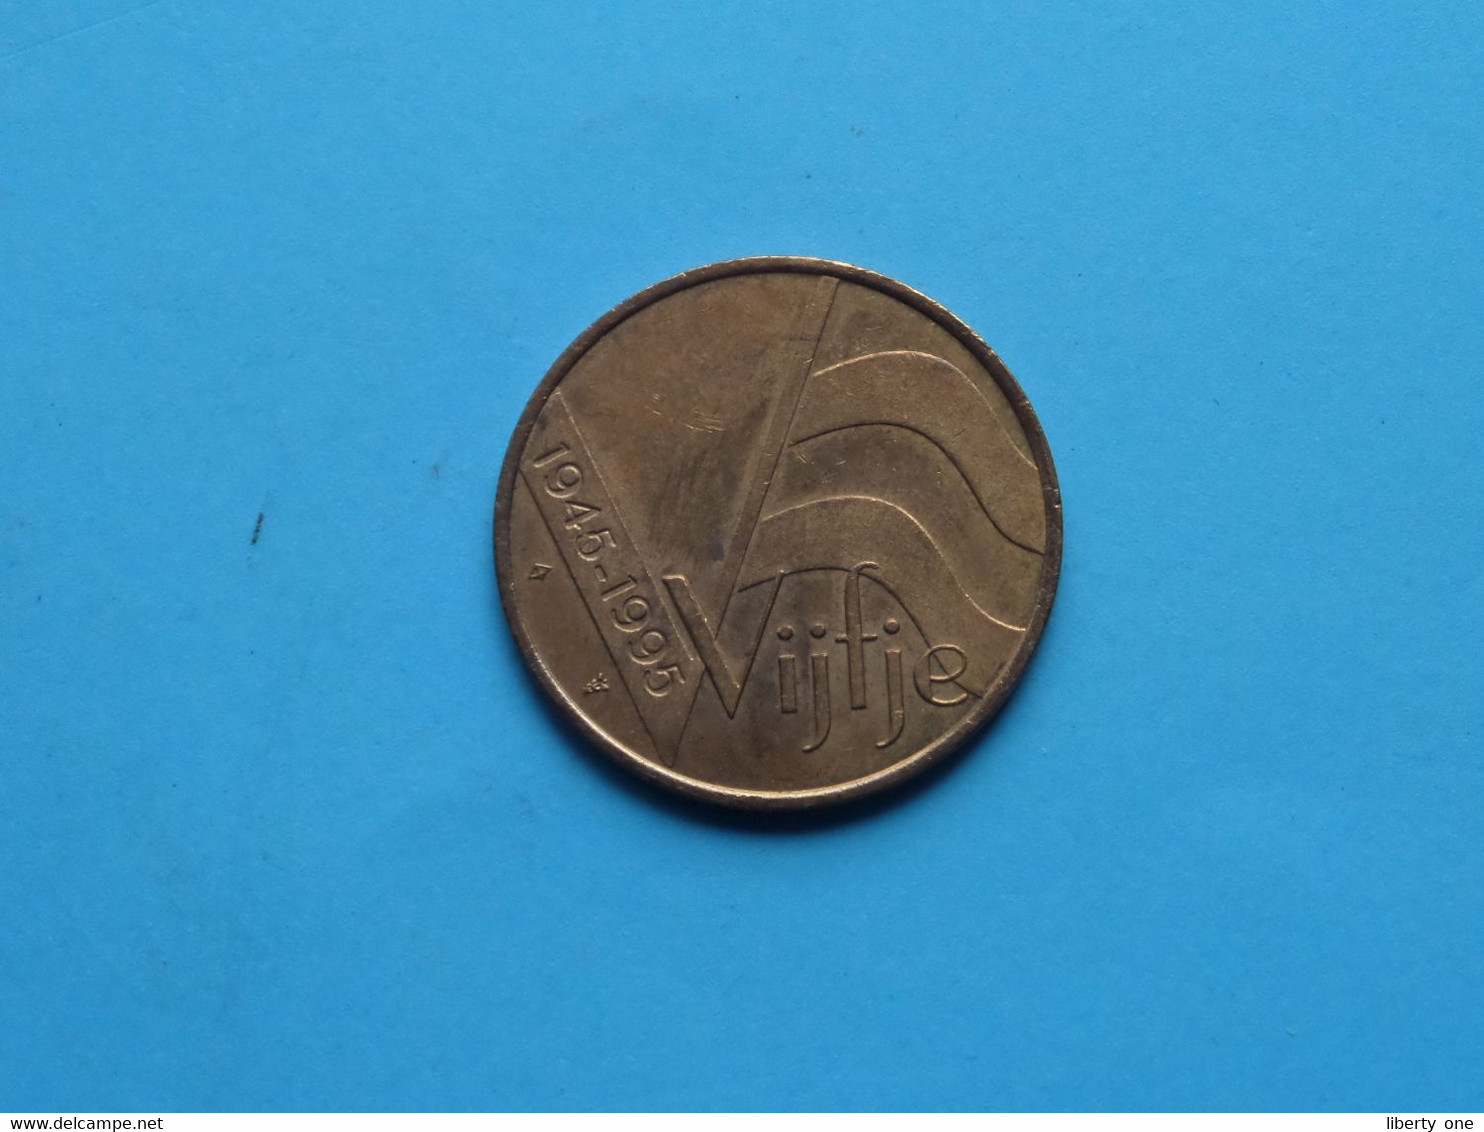 VIJFJE 1945-1995 ( See SCANS ) 3 Cm. - Souvenir-Medaille (elongated Coins)